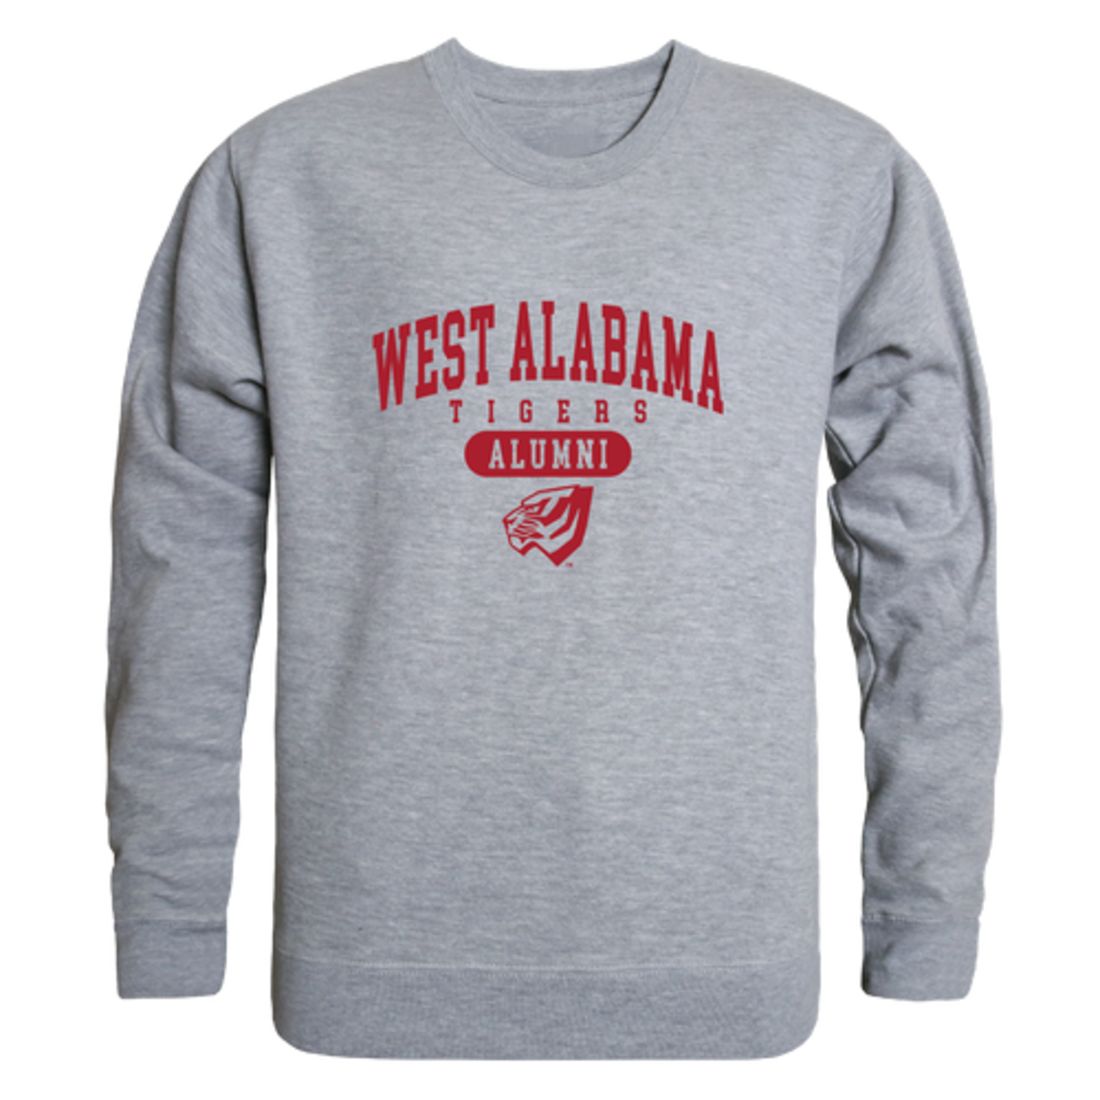 UWA University of West Alabama Tigers Alumni Fleece Crewneck Pullover Sweatshirt Heather Charcoal-Campus-Wardrobe